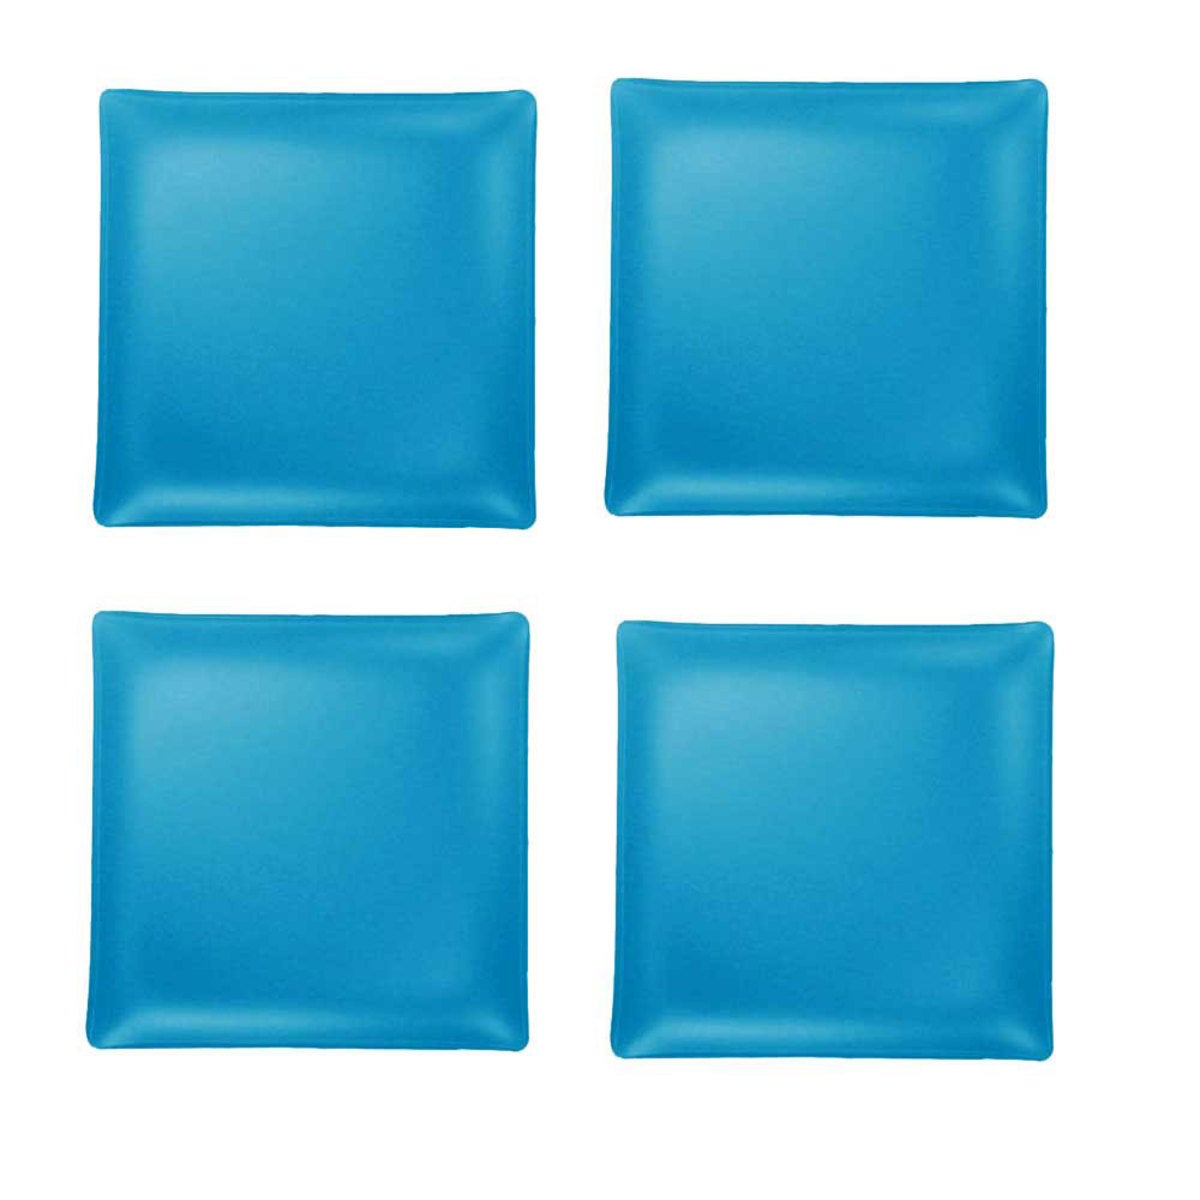 SeaGlass Square Plates, 11", Set of 4 - Blue